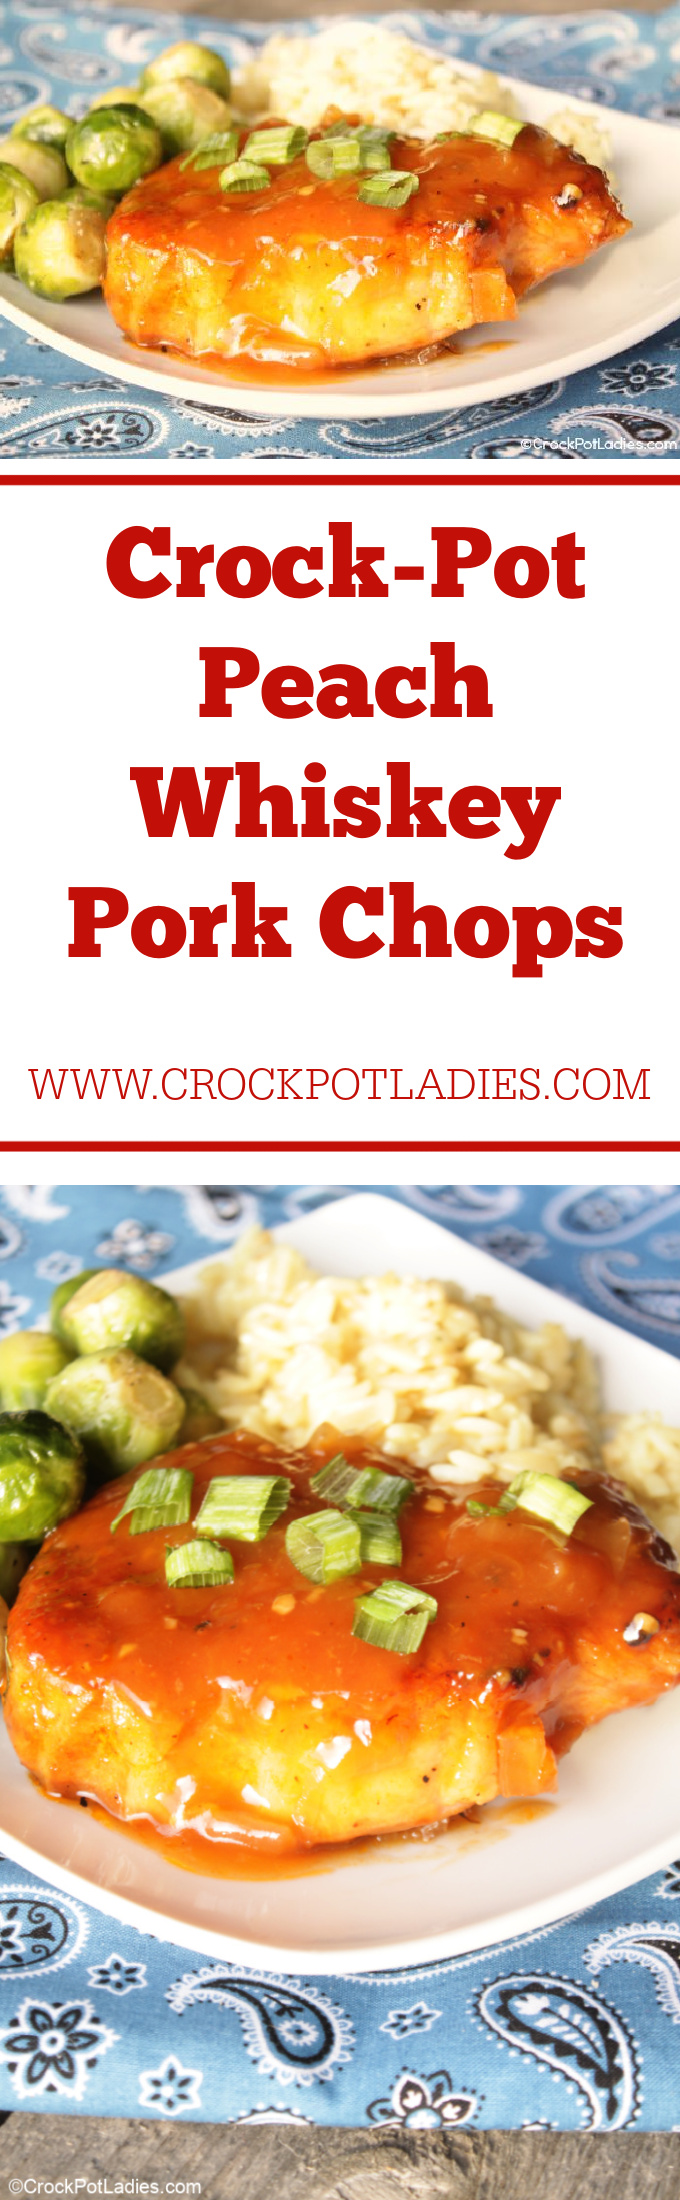 Crock-Pot Peach Whiskey Pork Chops